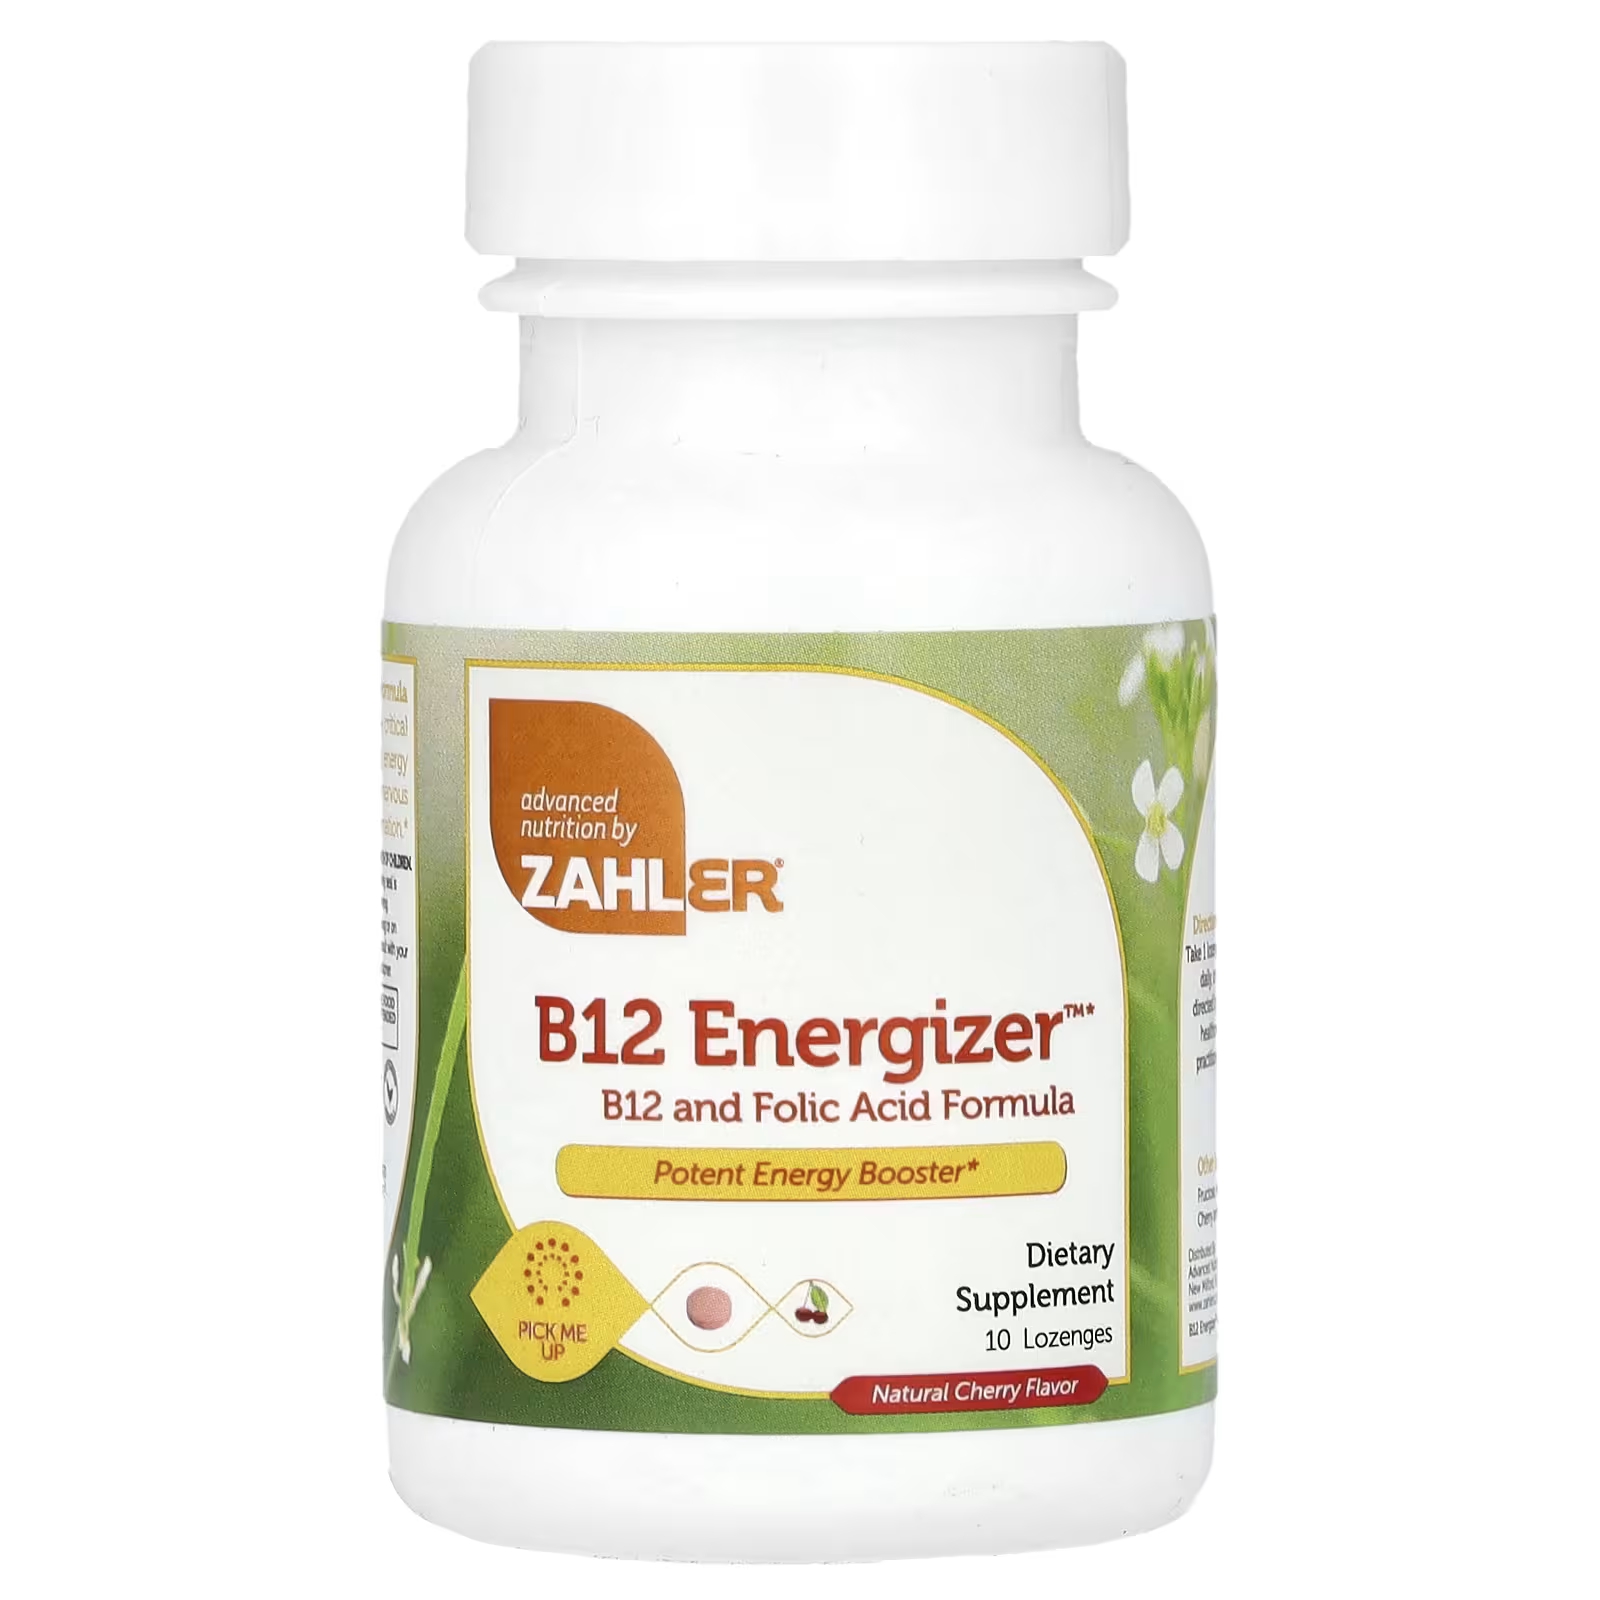 Пищевая добавка Zahler B12 Energizer натуральная вишня, 10 пастилок swanson activated b12 complex натуральная вишня 60 пастилок